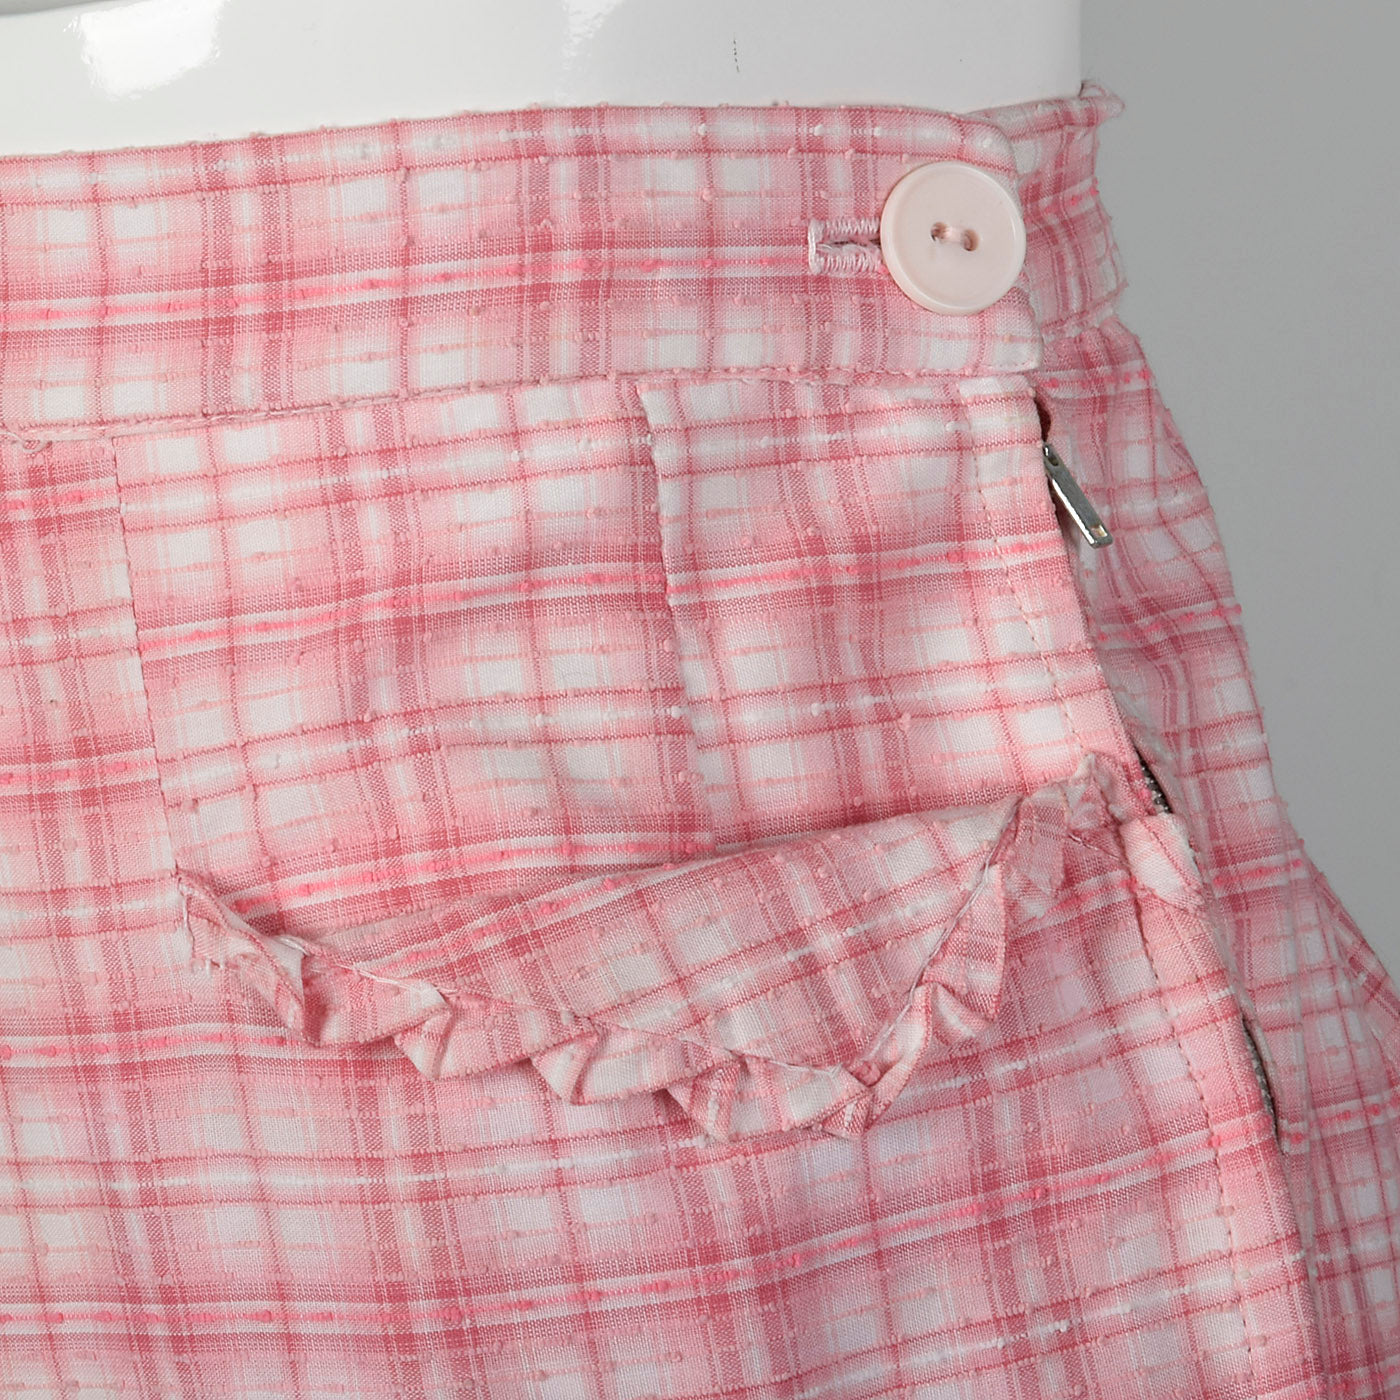 1950s Pink Plaid Shorts